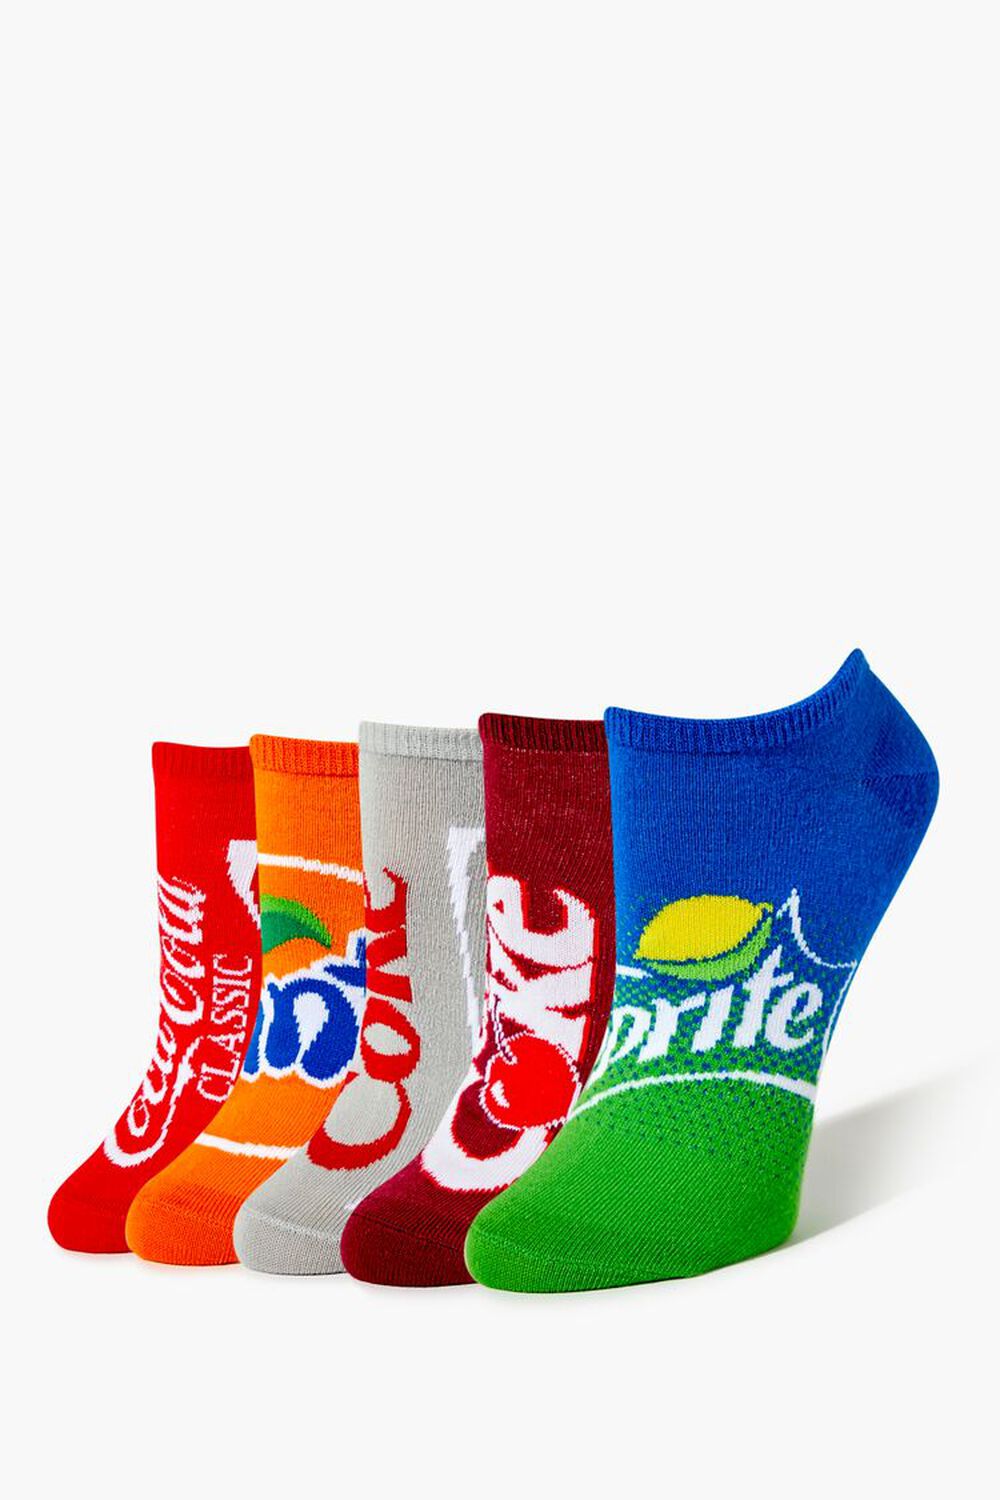 Soda Graphic Ankle Socks Set - 5 pck, image 1